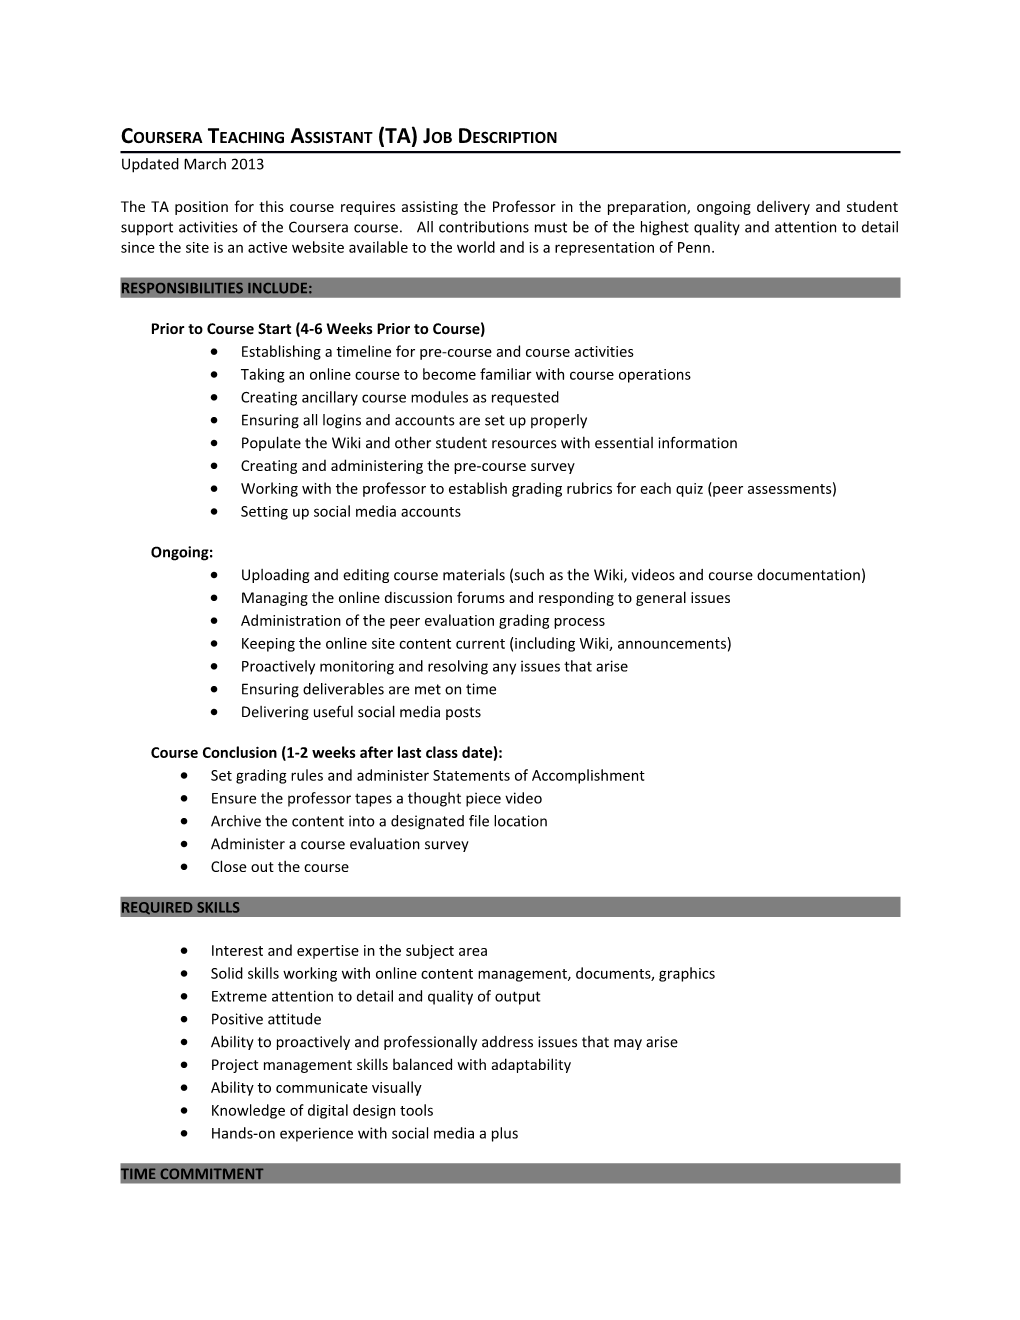 Coursera Teaching Assistant (TA) Job Description